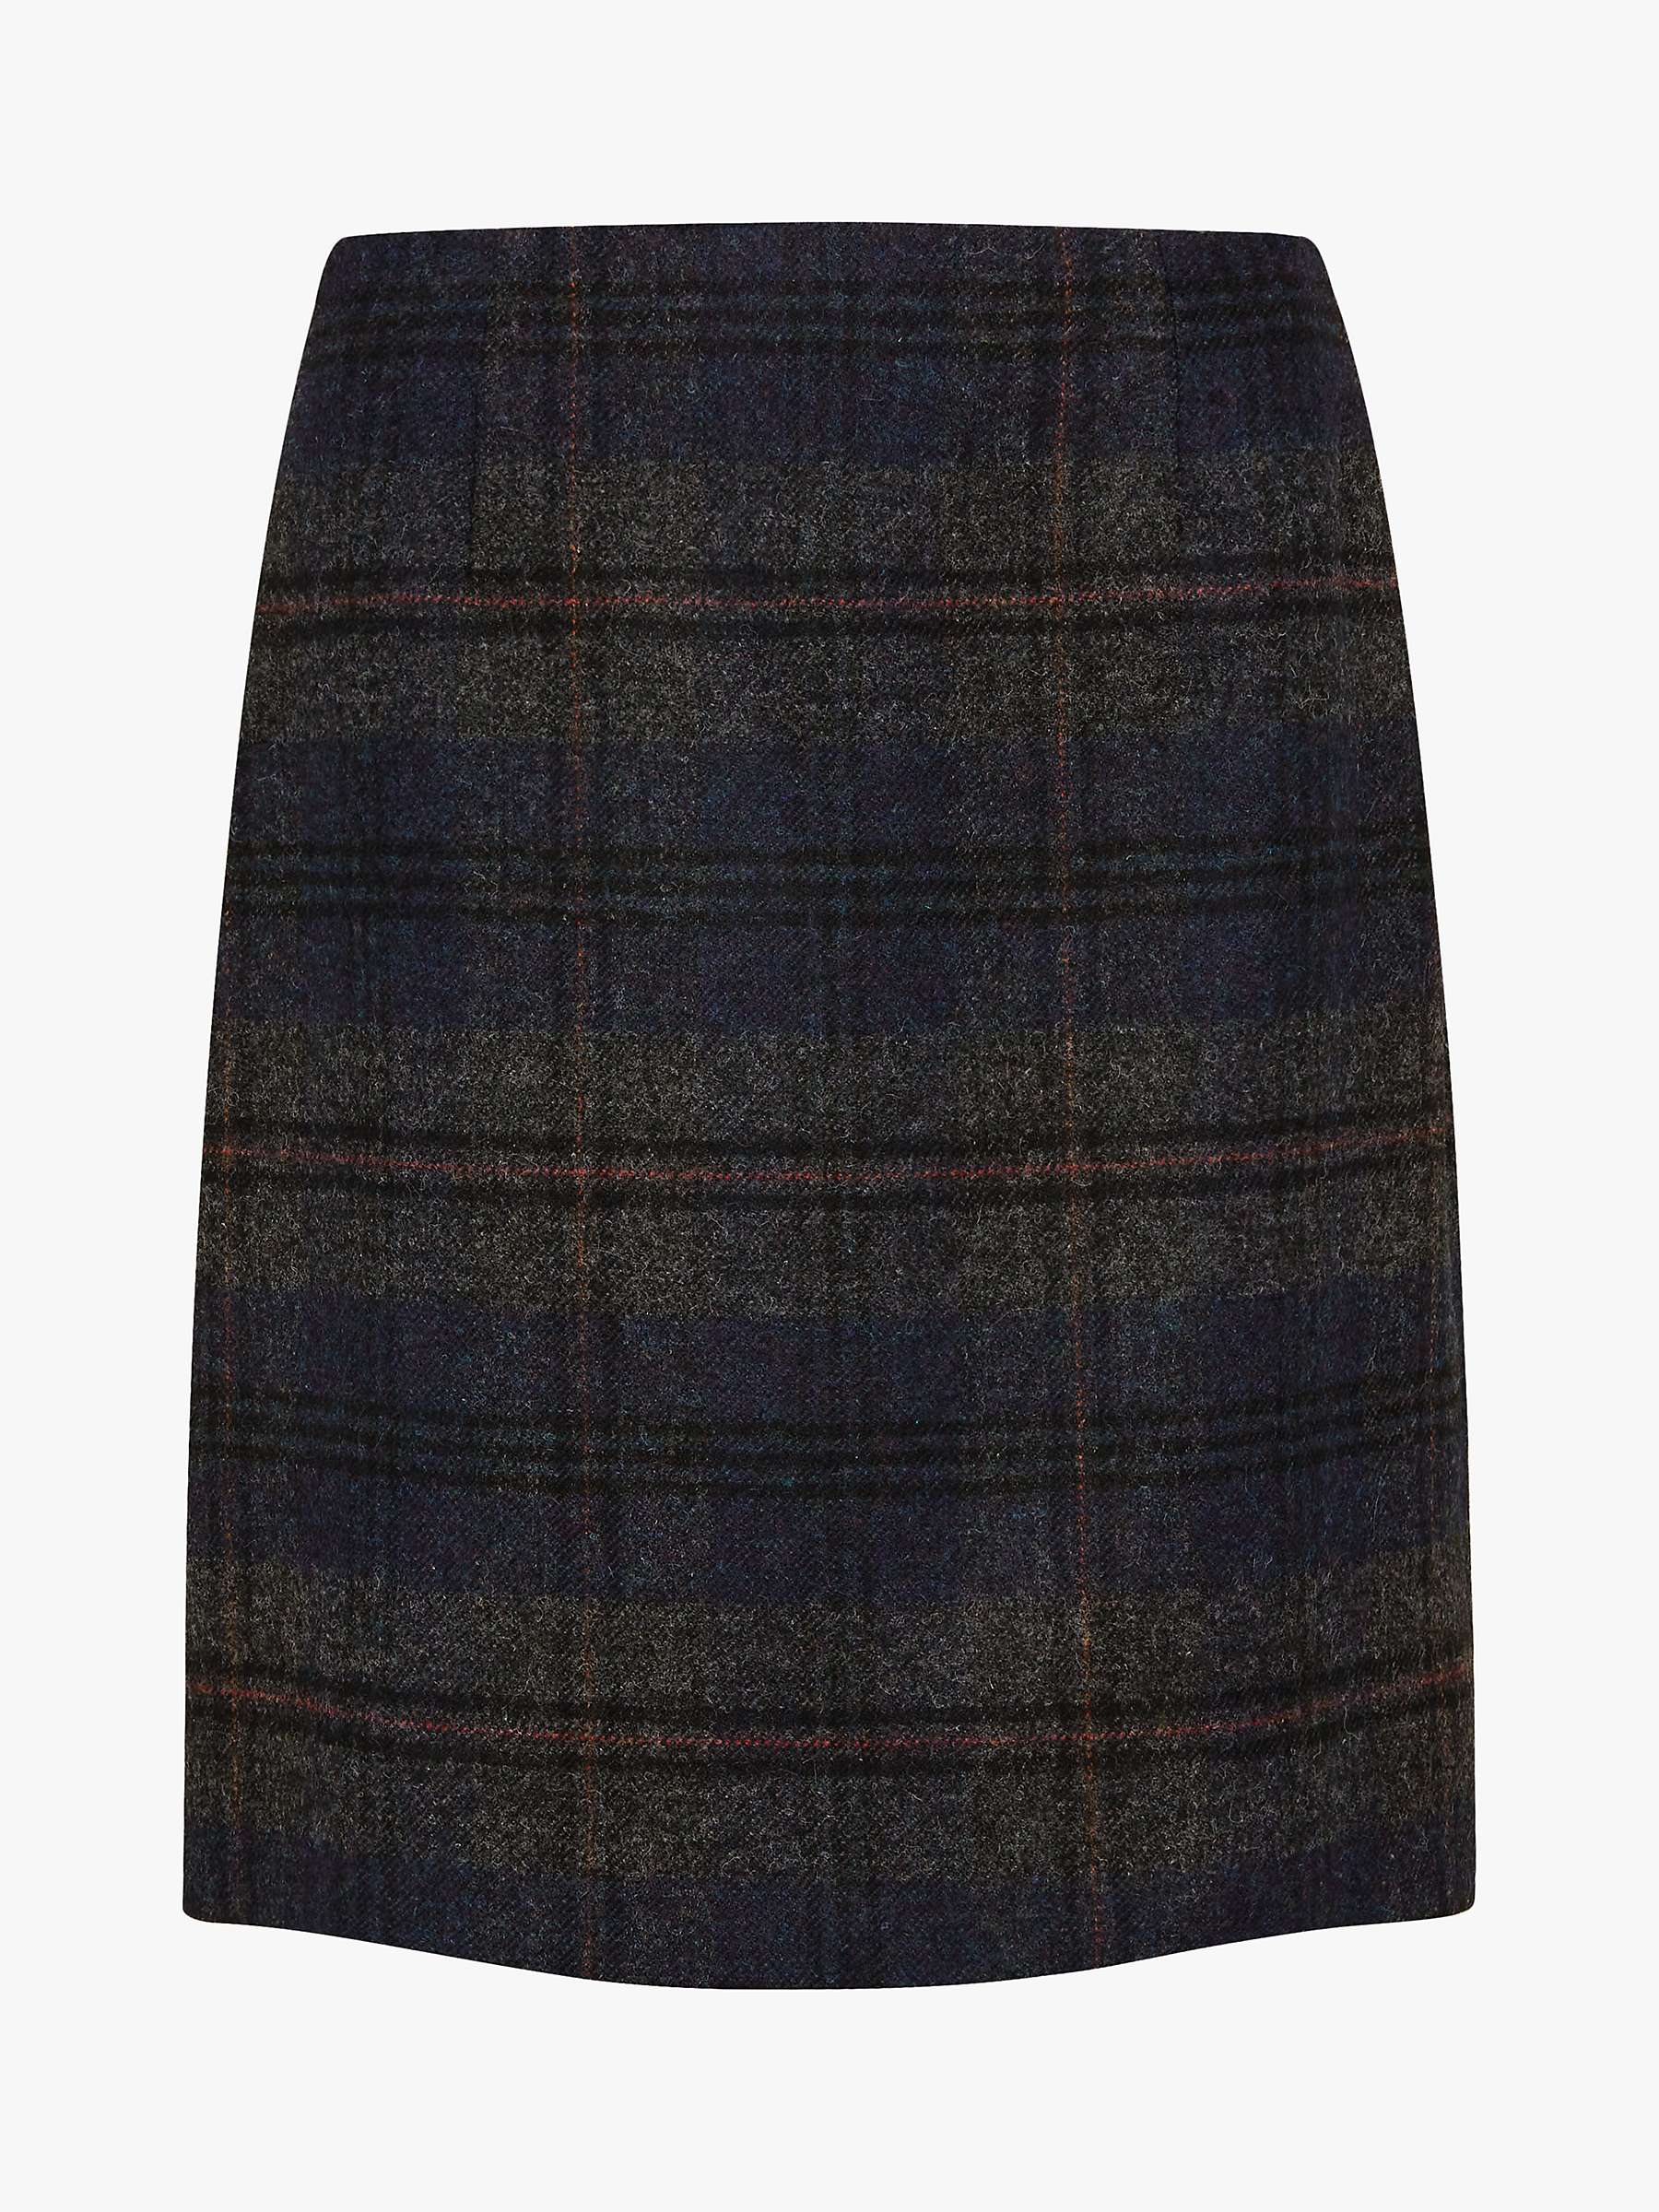 Buy Celtic & Co. Wool Mini Skirt, Navy/Charcoal Online at johnlewis.com